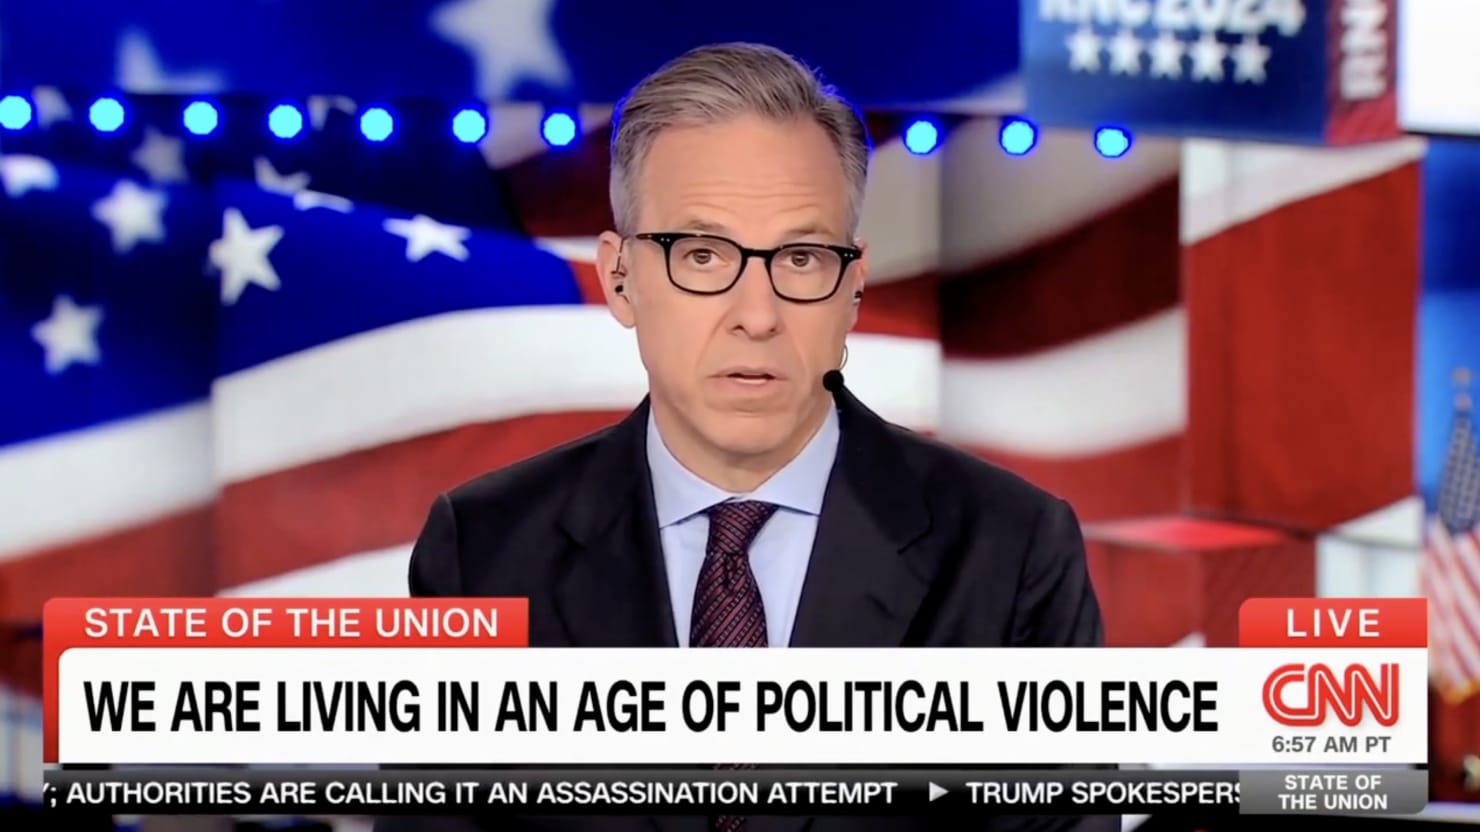 Jake Tapper’s voice breaks as he speaks on CNN about the Trump assassination